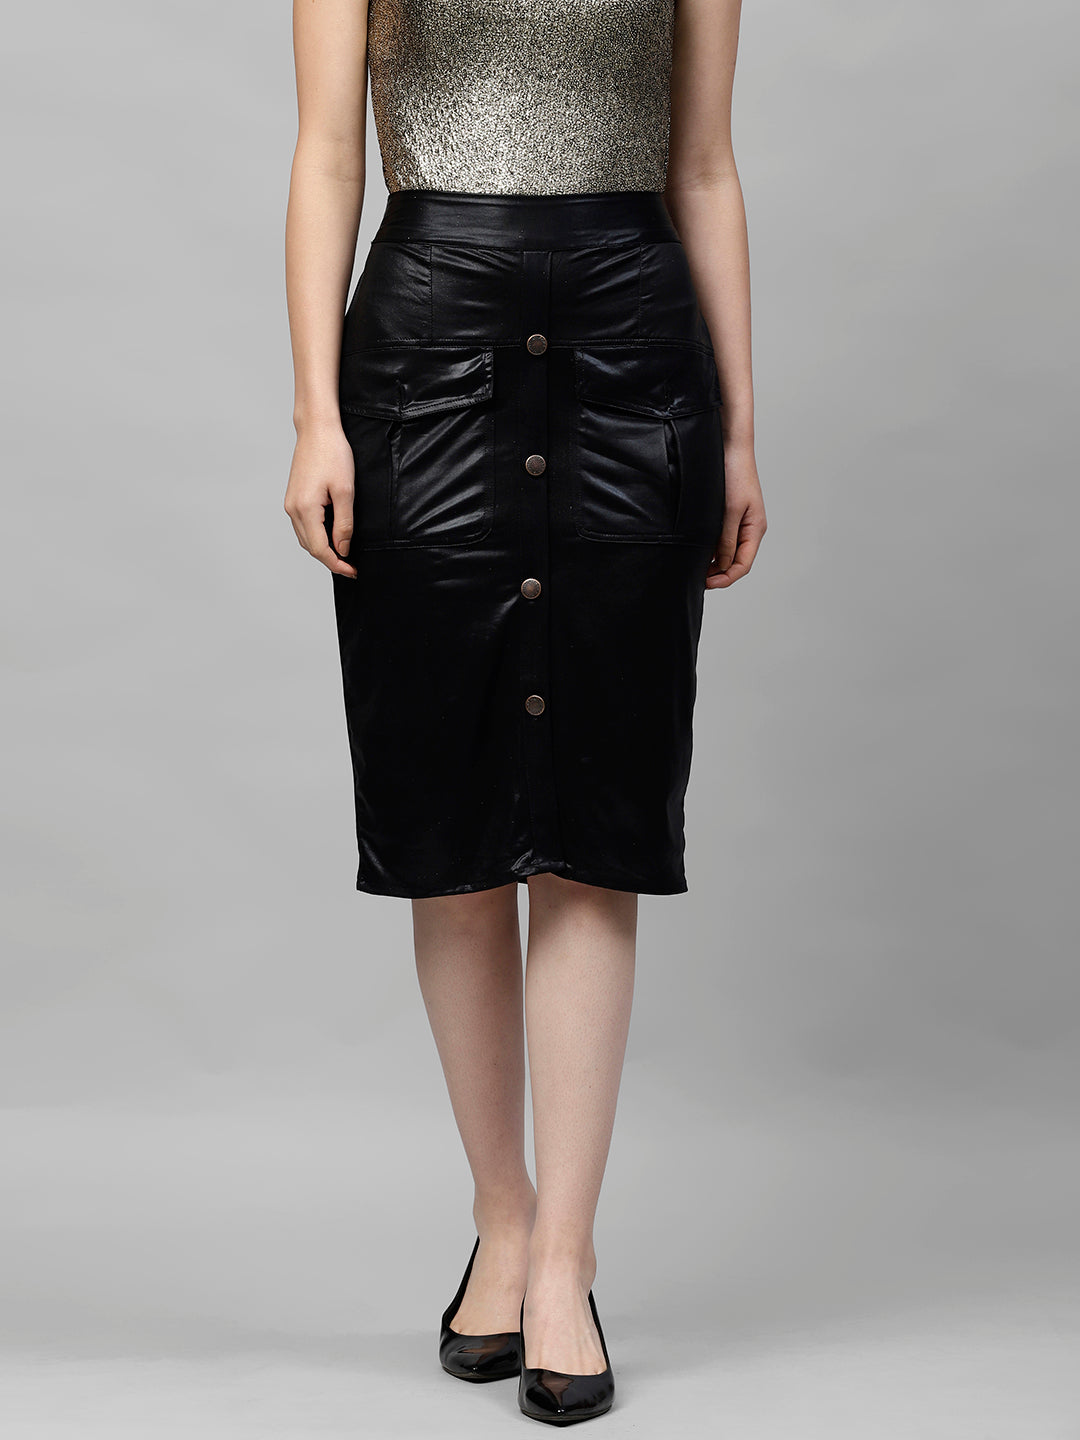 Athena Black Knee Length Skirt - Athena Lifestyle